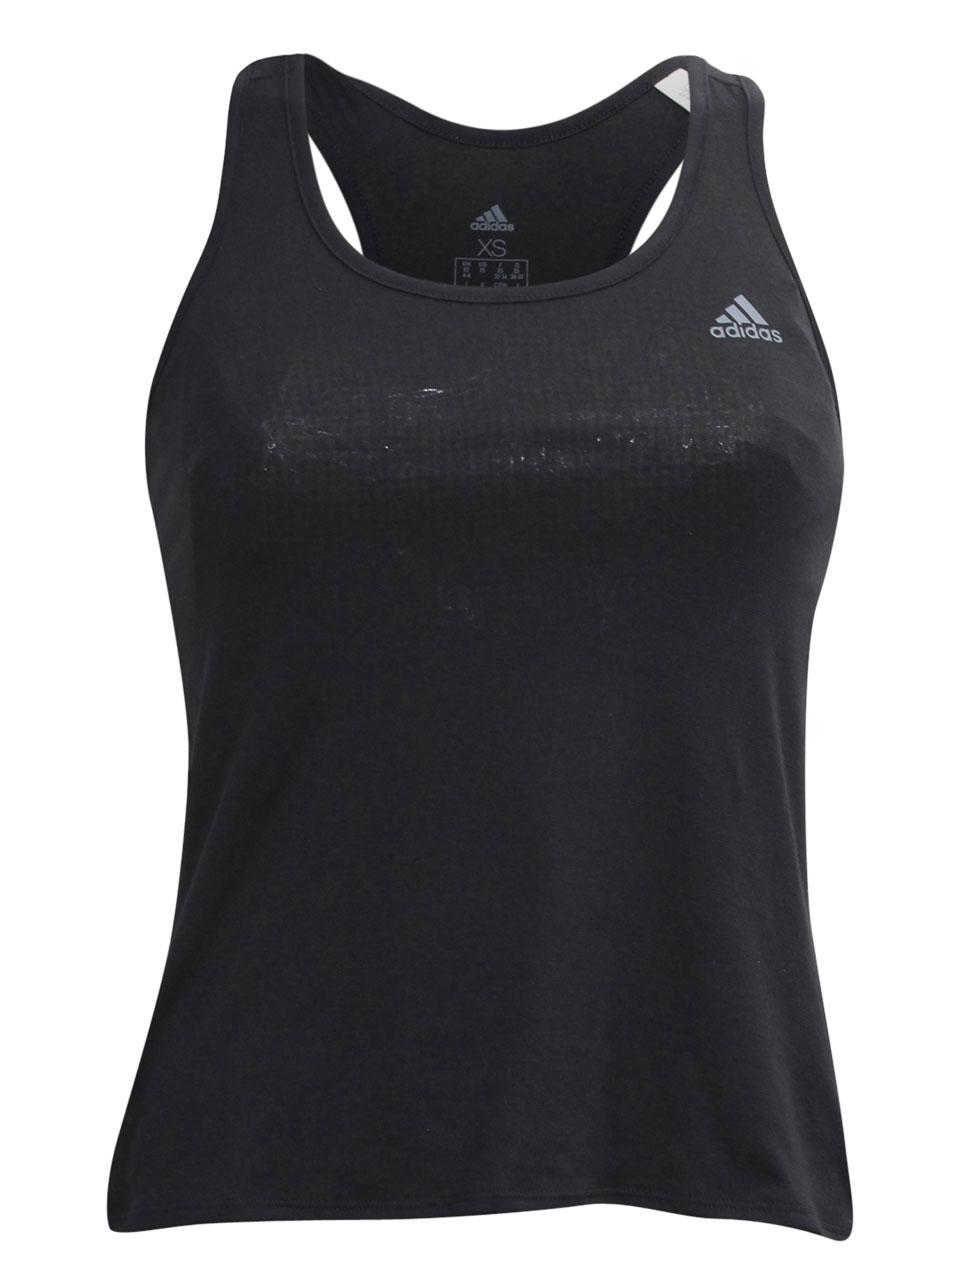 Adidas Women's Climalite Tank Top Shirt | JoyLot.com